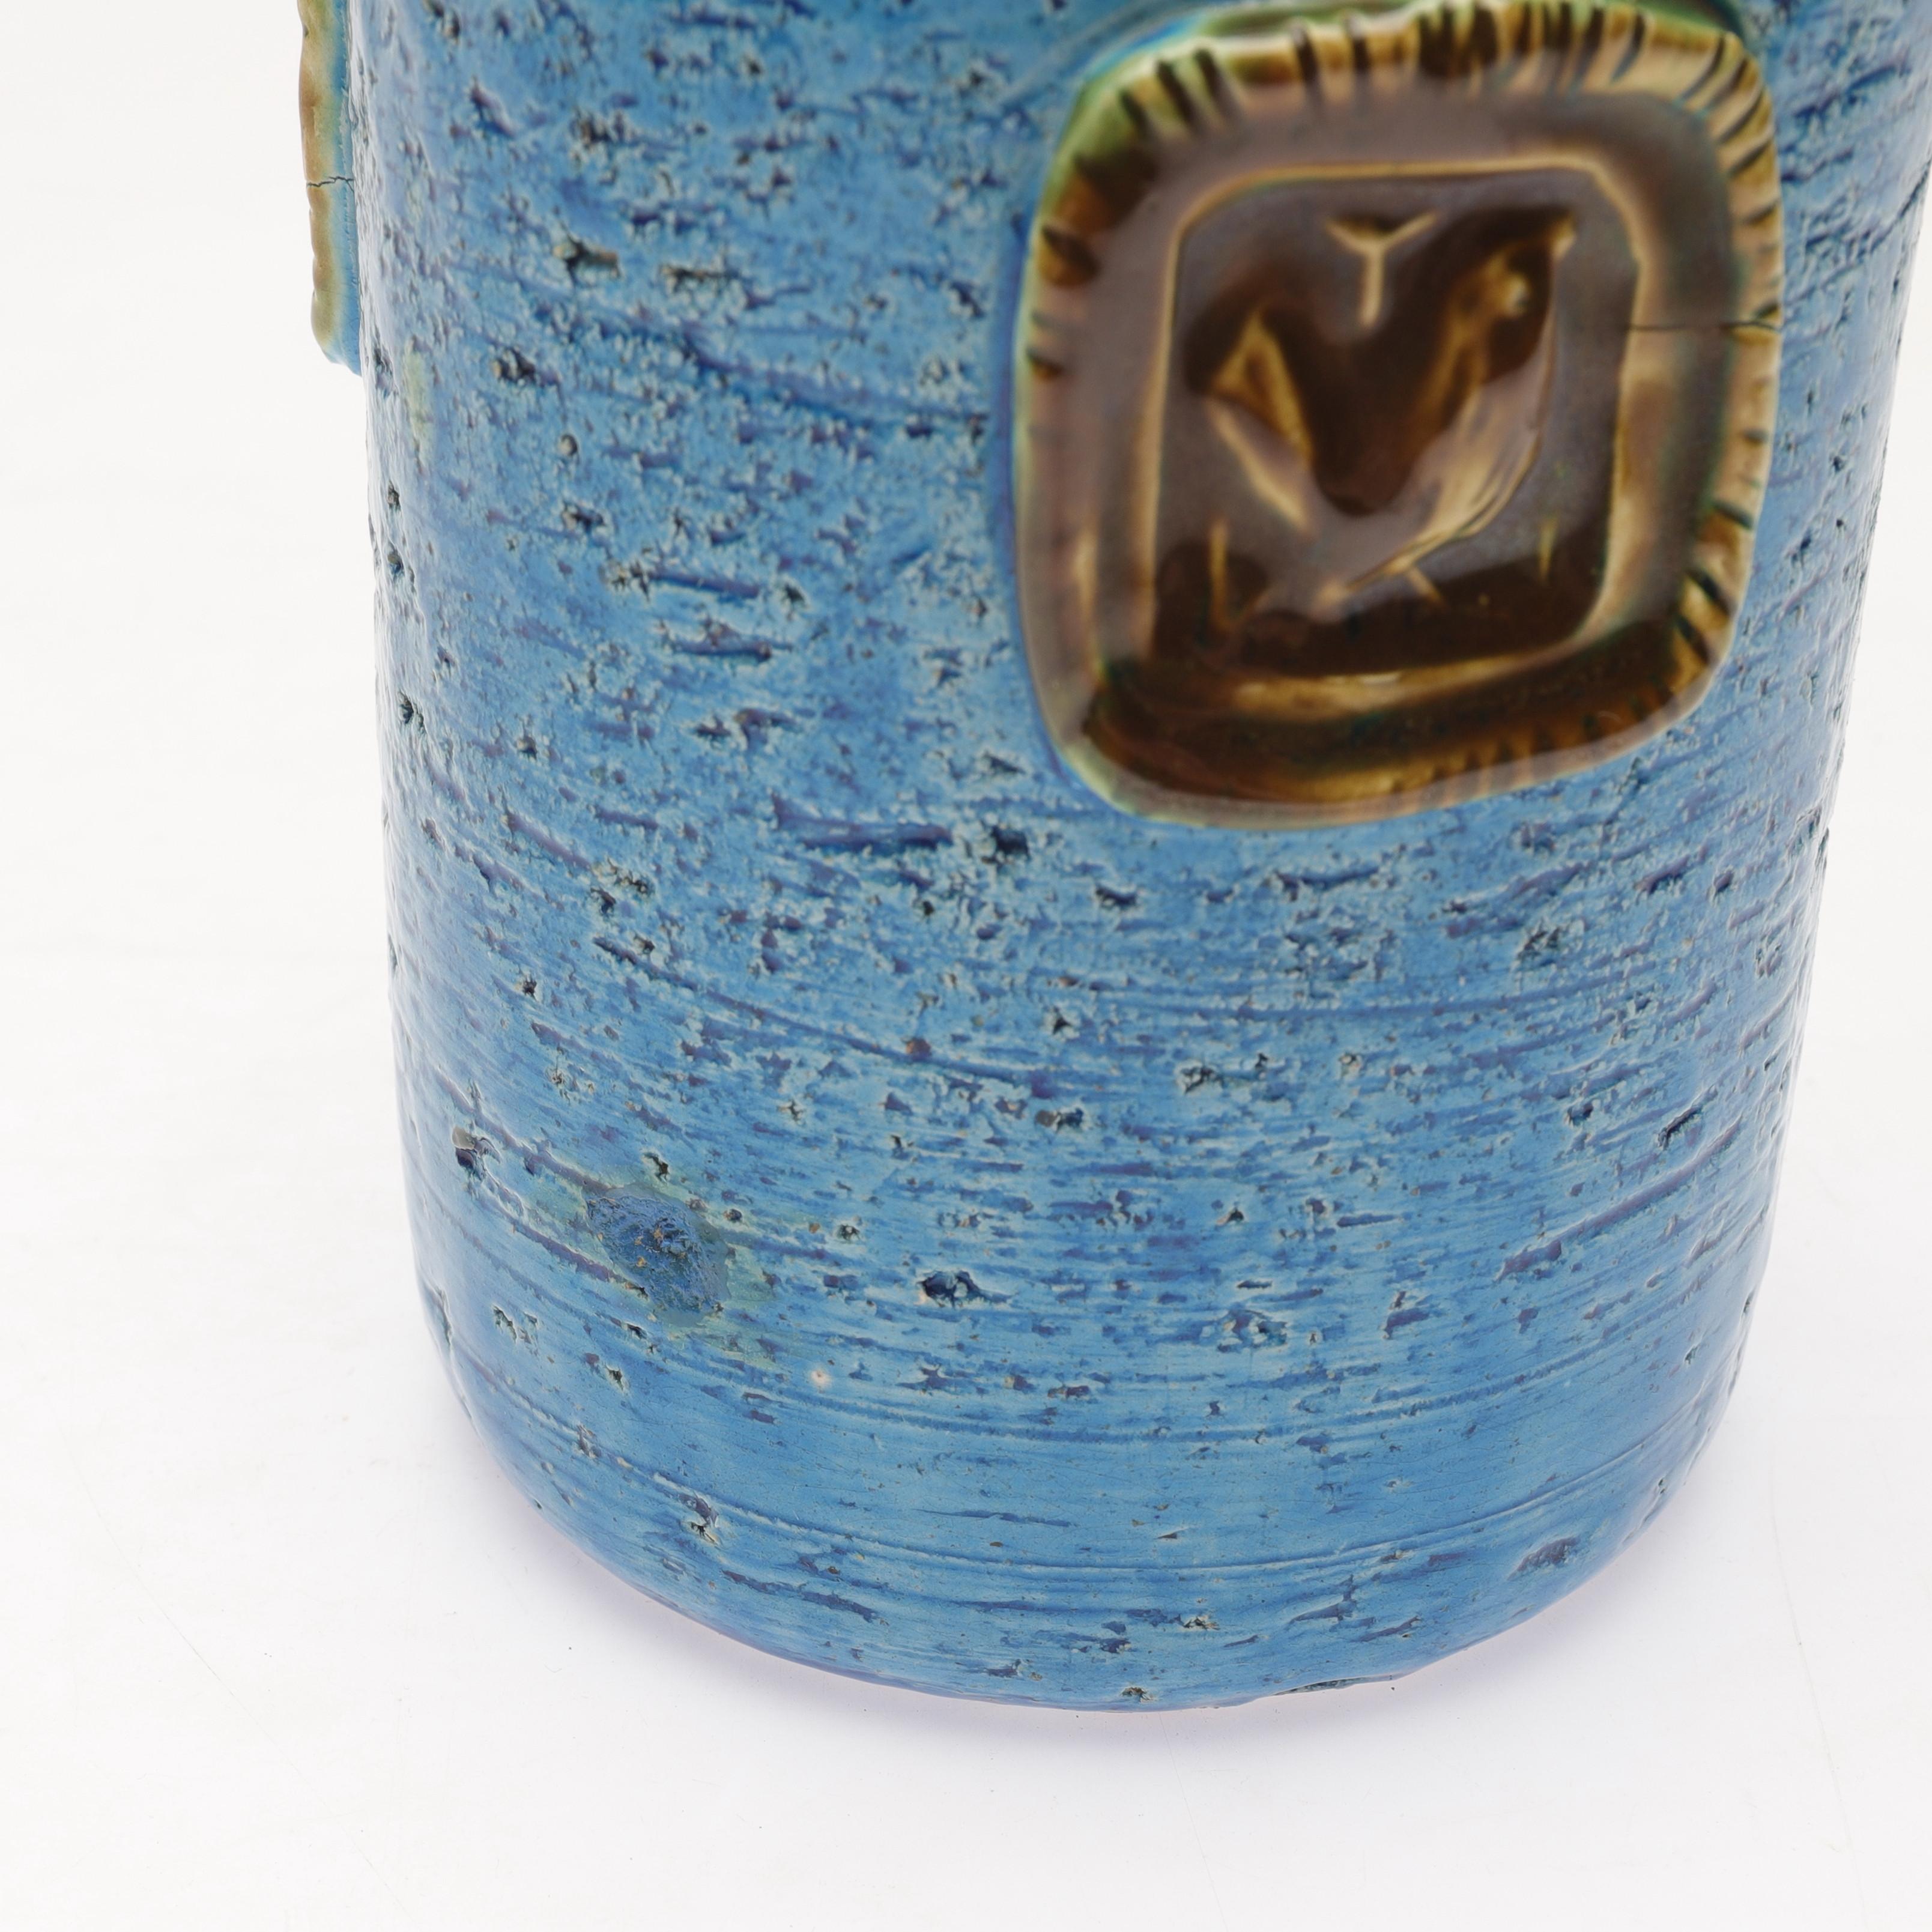 ALDO LONDI. vase, ceramics, Bitossi, Italy, around 1960
A rare Model stamped on the reverse.
Good condition. Crackling frenzy.